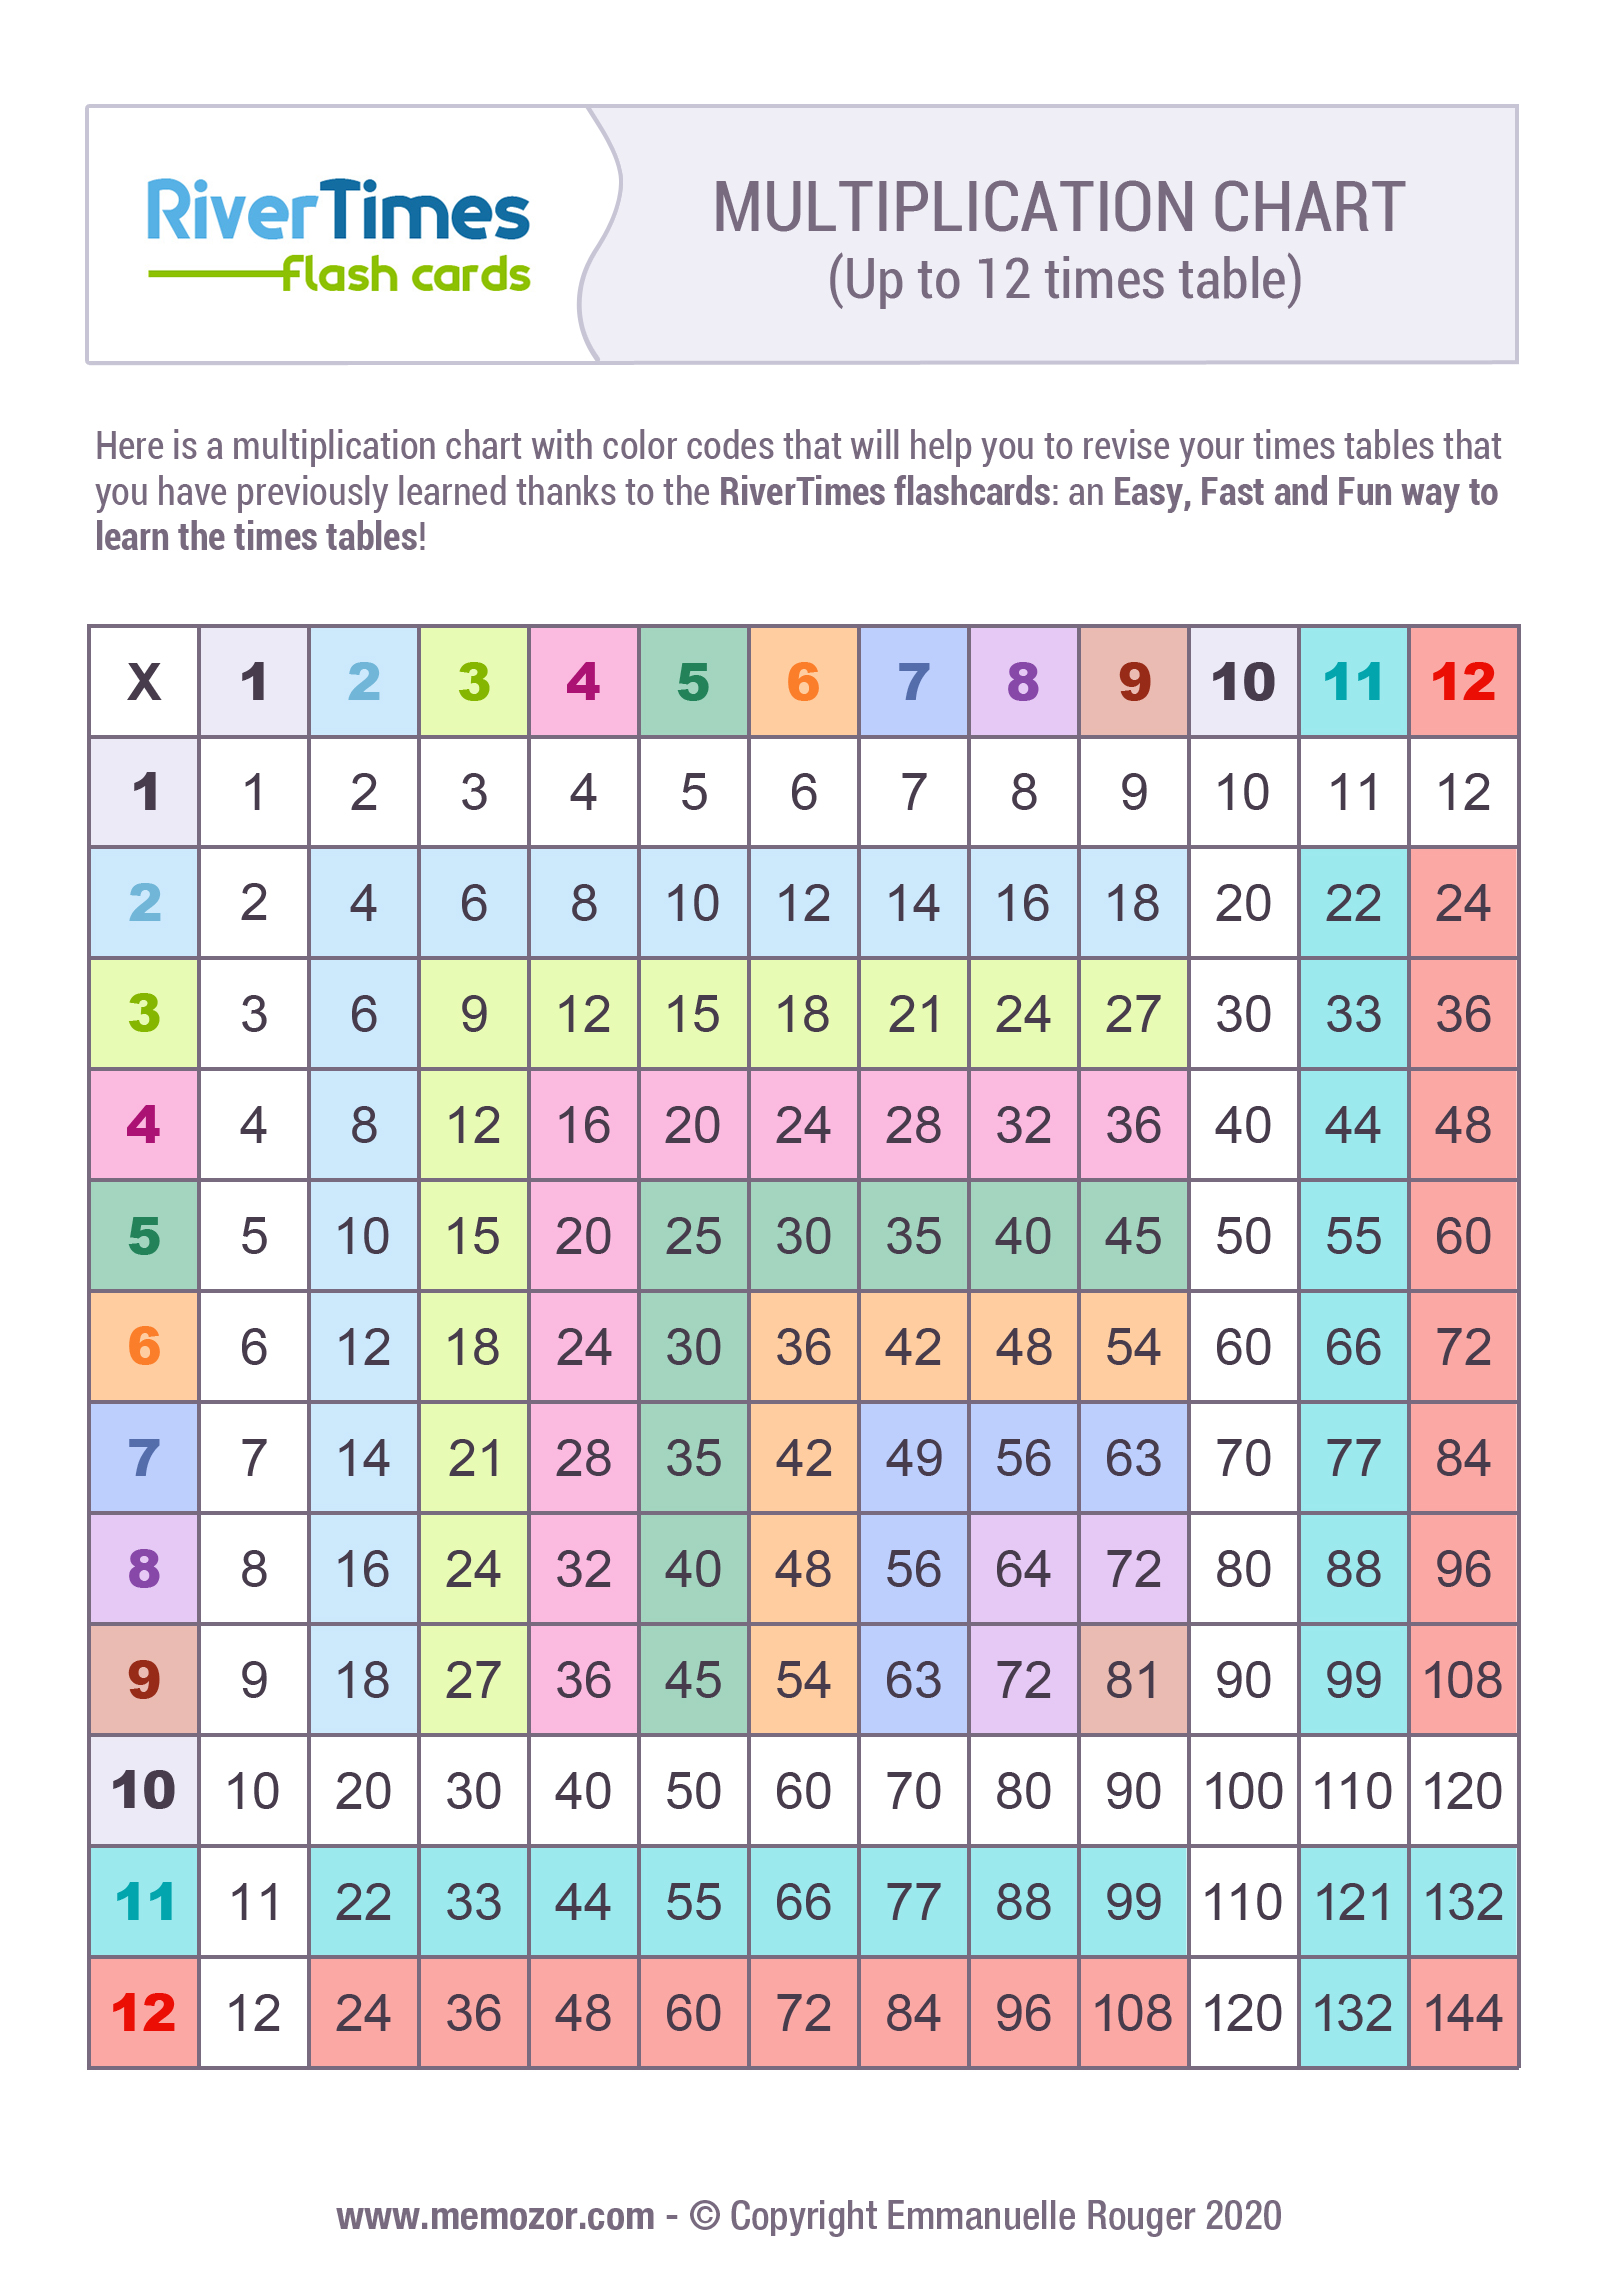 printable-colorful-multiplication-chart-1-12-rivertimes